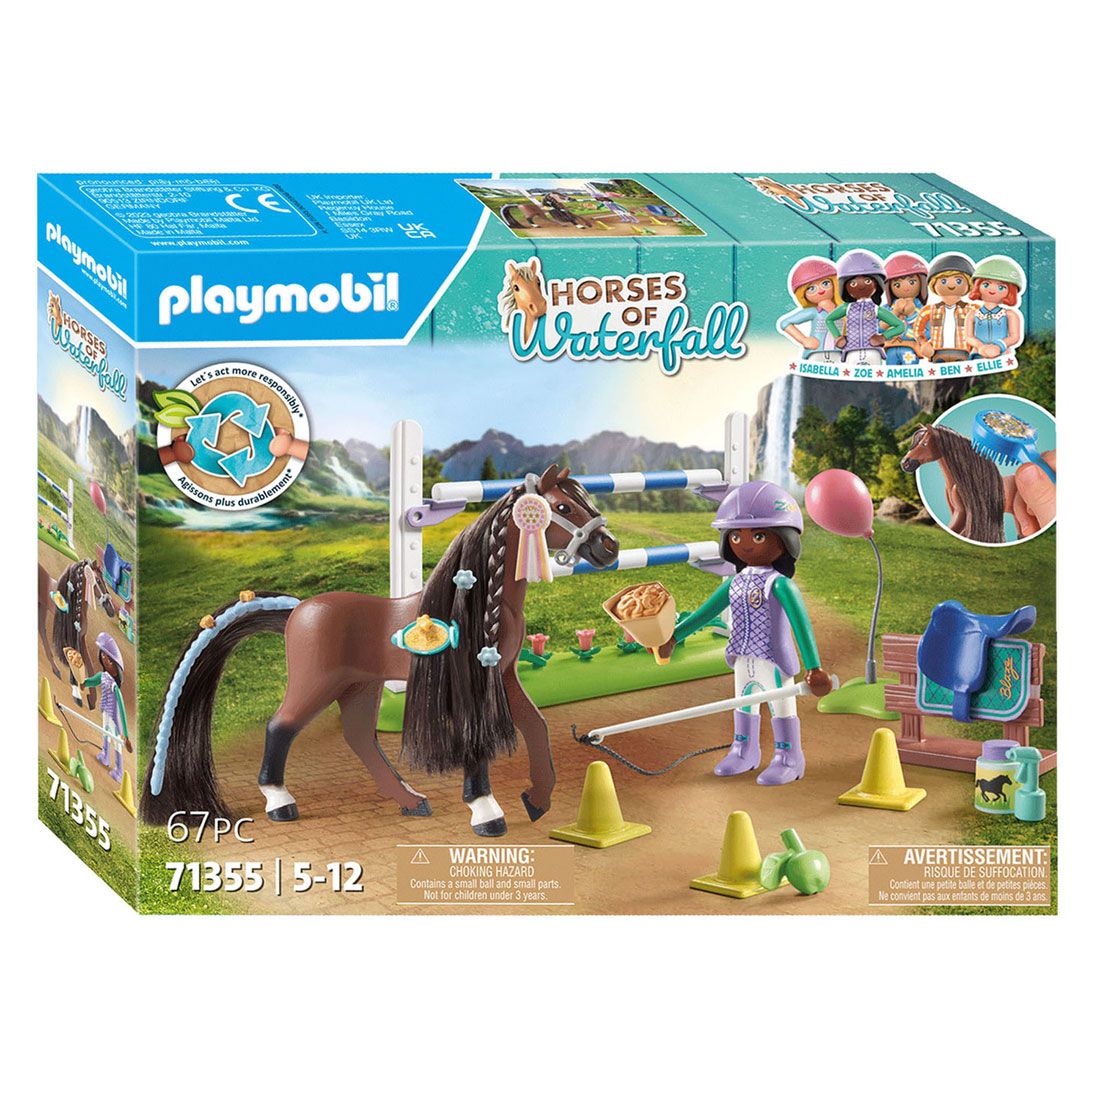 Playmobil Horses of Waterfall 71470 pas cher, Promenade à cheval